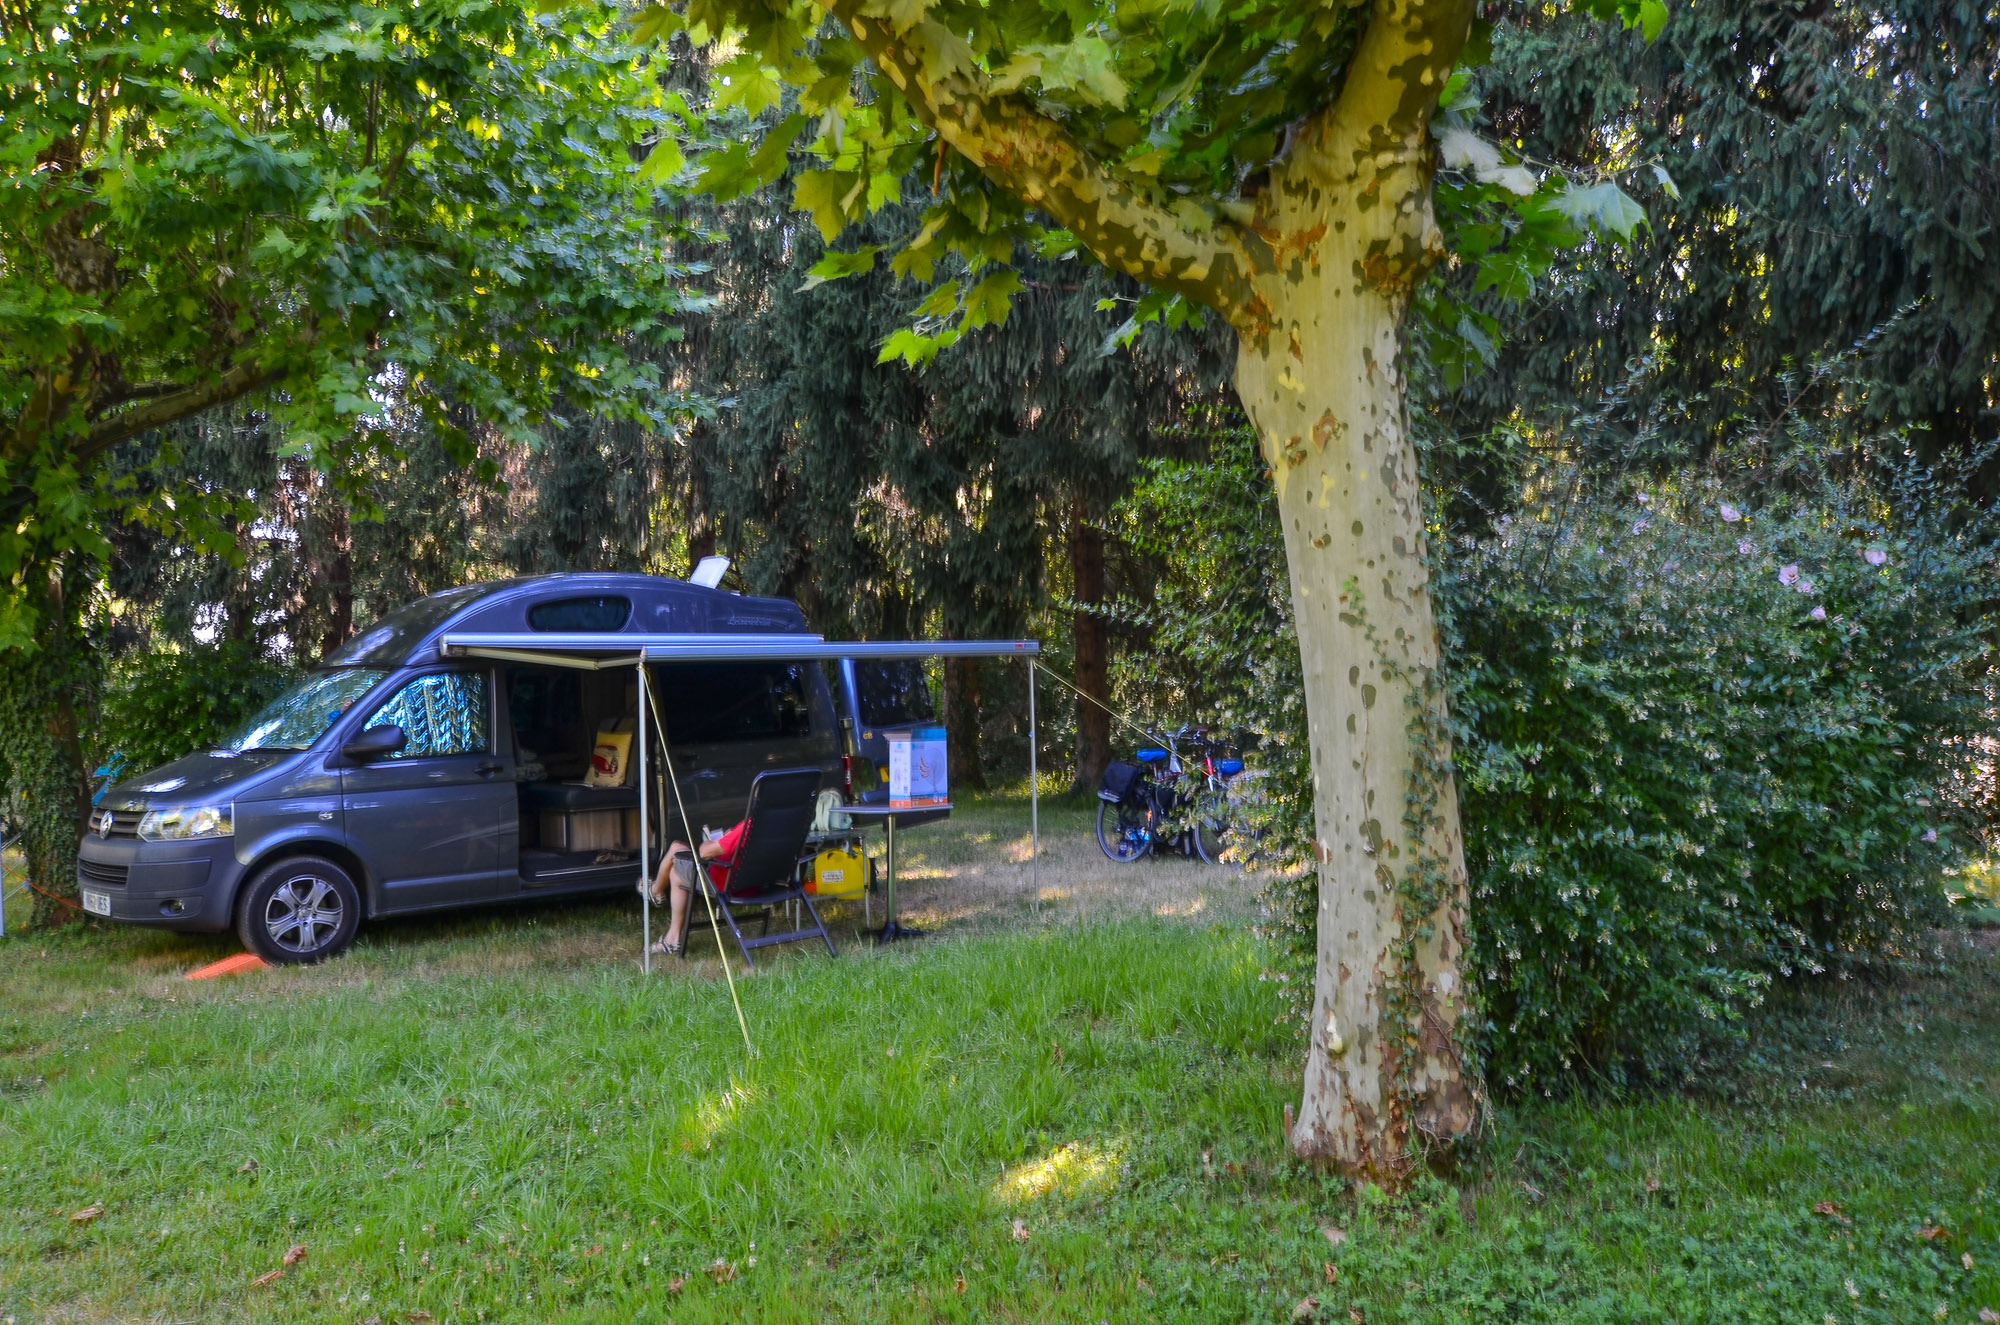 Shady pitches at camping Dordogne